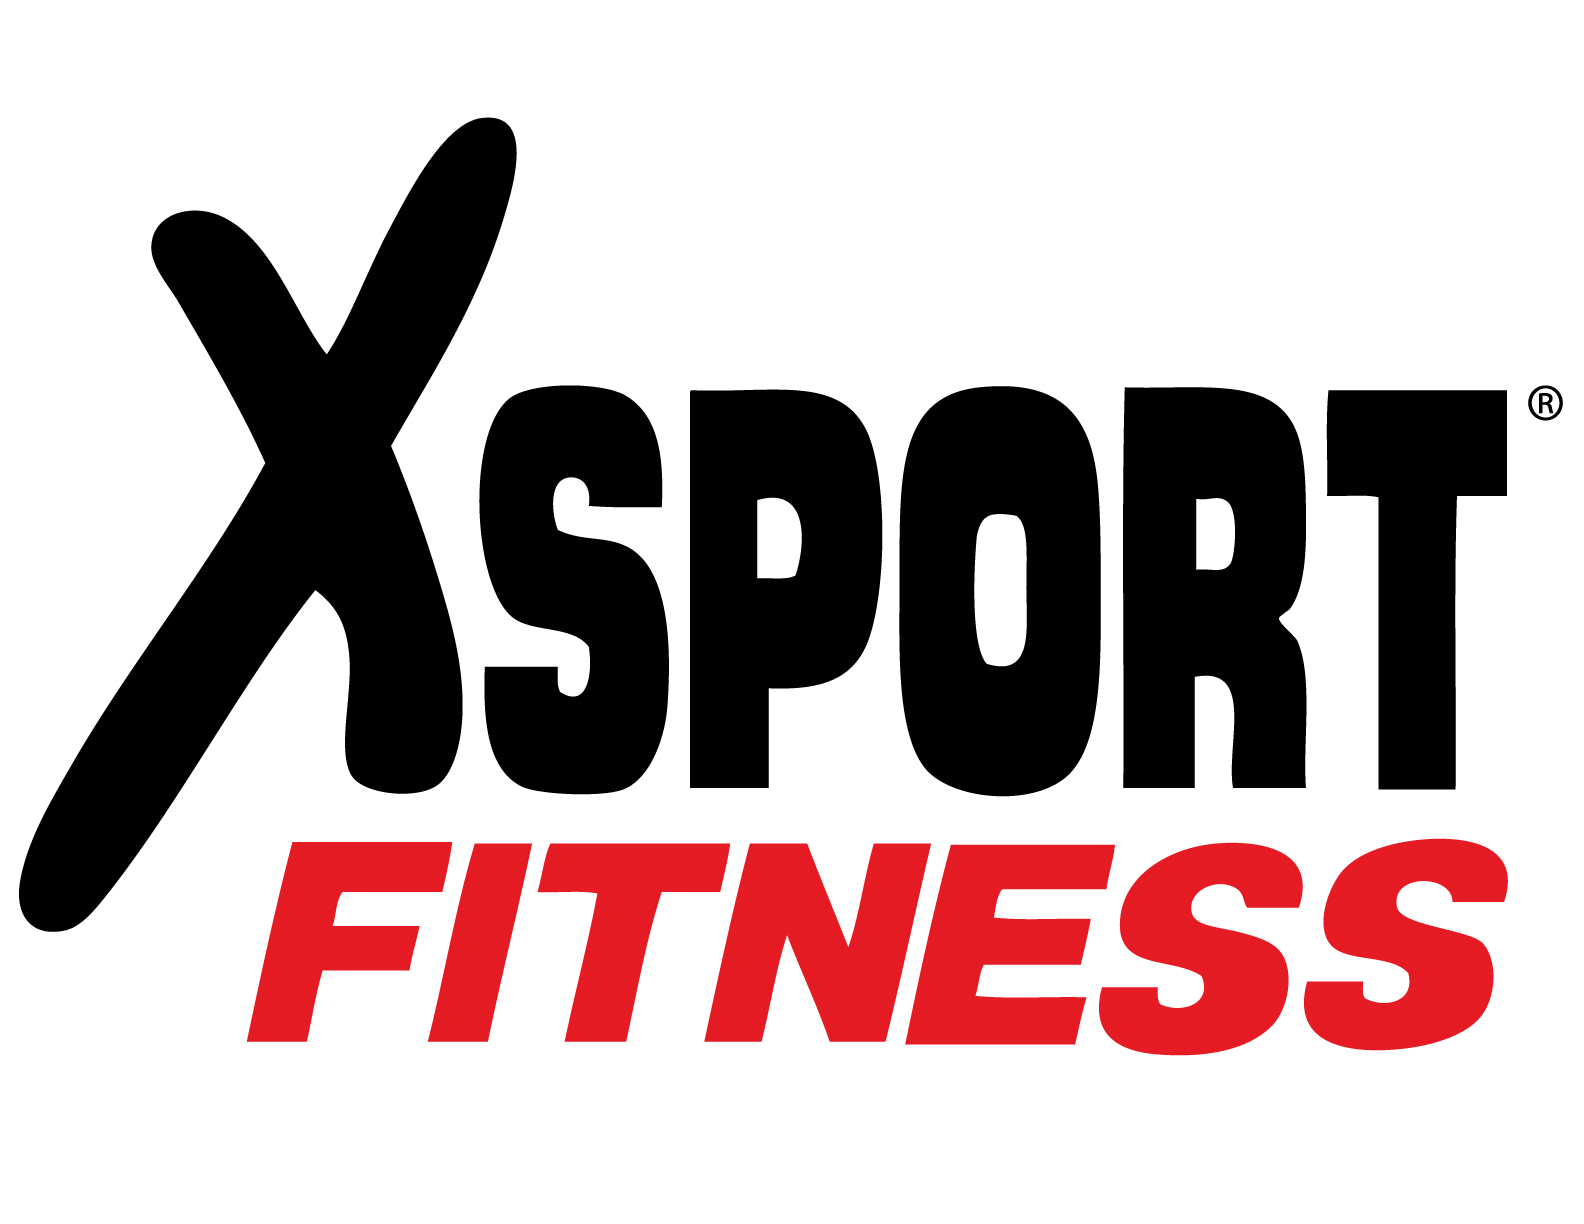 XSport Fitness - Logo